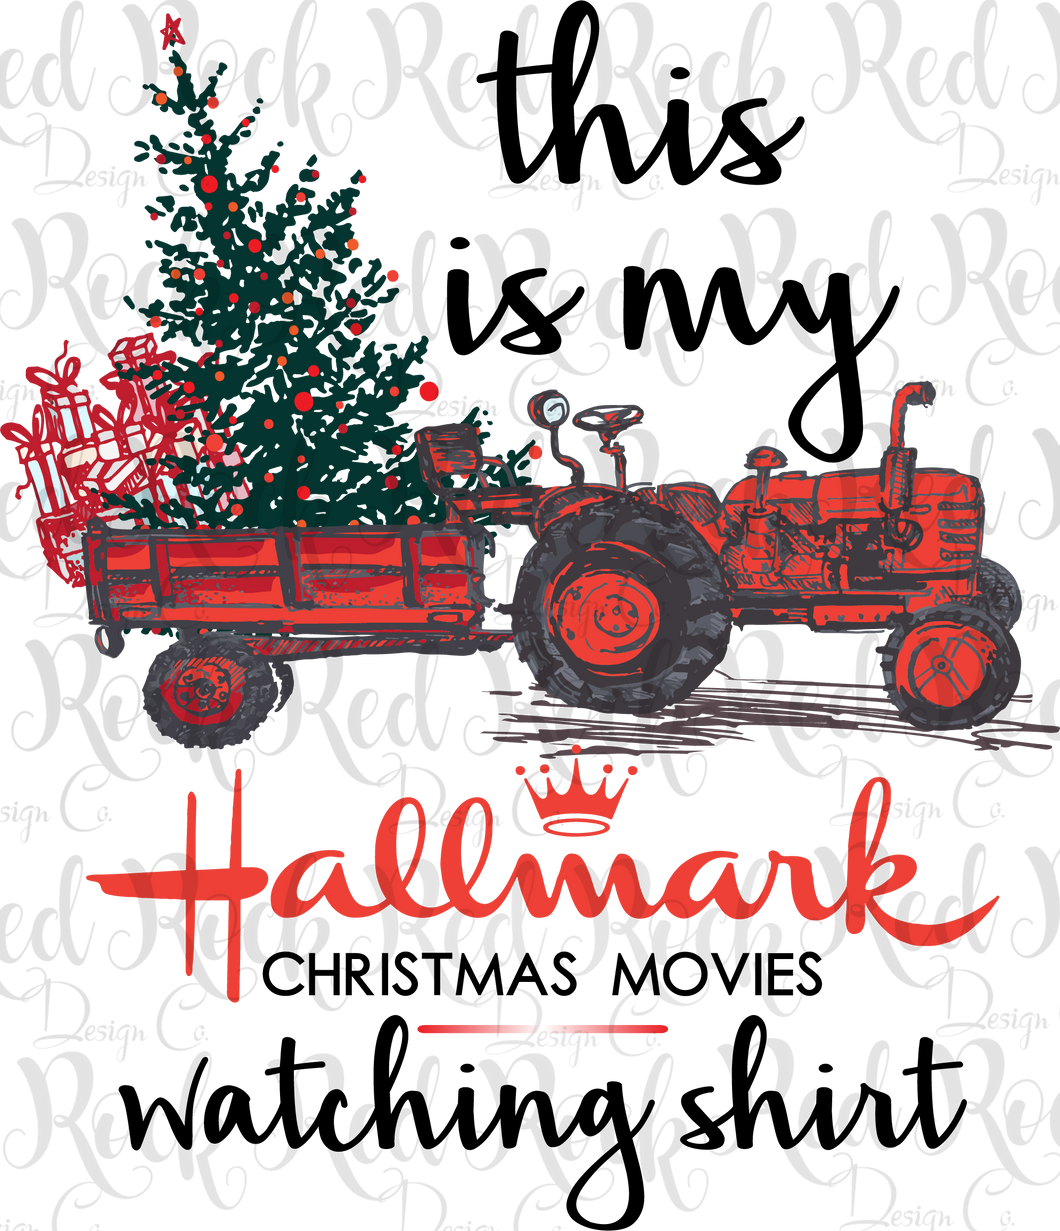 This is my Hallmark Movie Shirt - Tractor